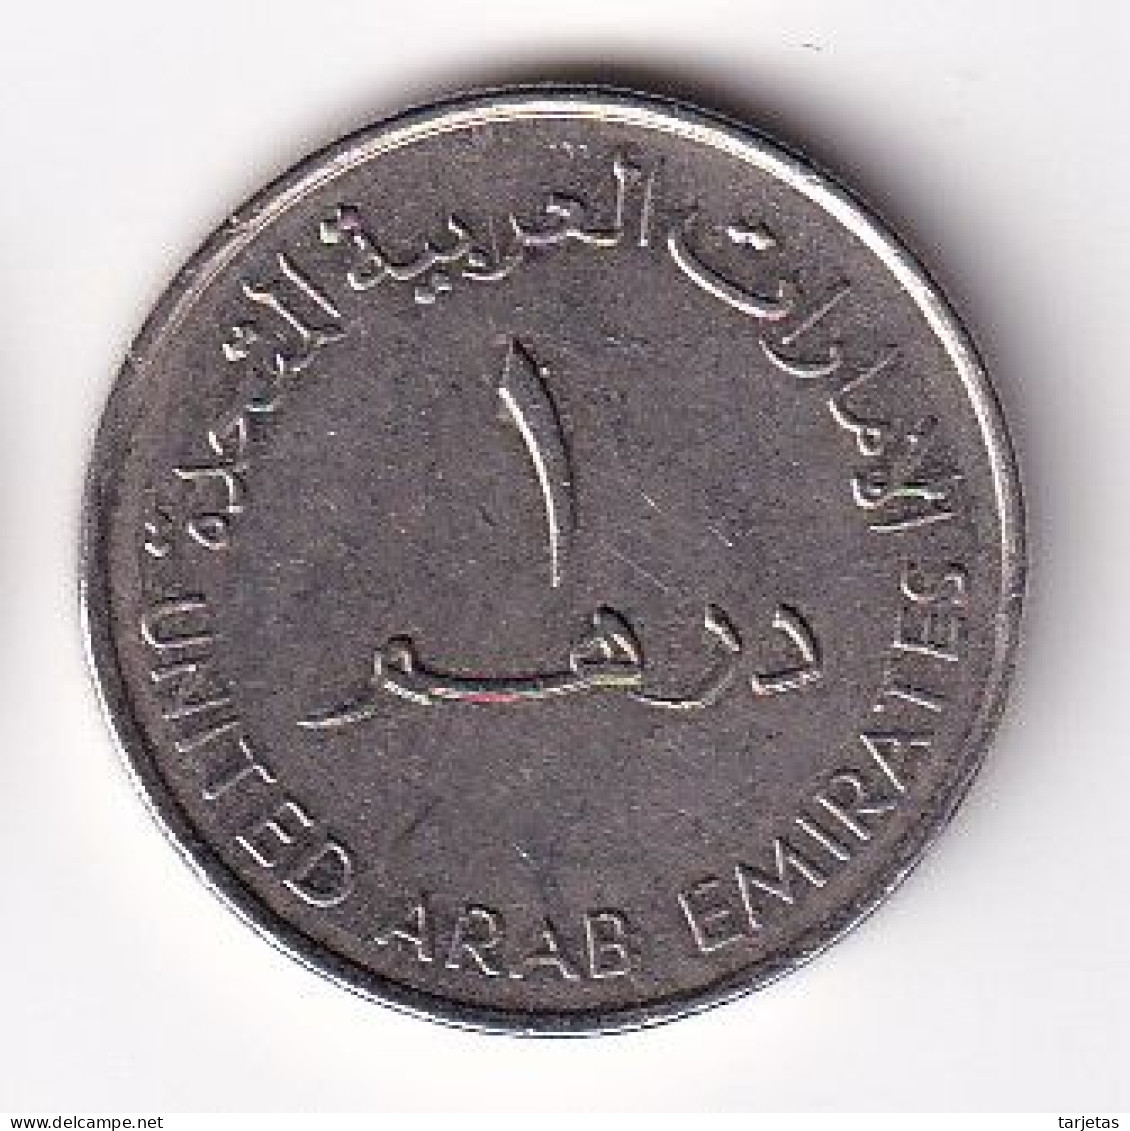 MONEDA DE EMIRATOS ARABES DE 1 DIRHAM DEL AÑO 2007 - SHARJAH INTERNATIONAL AIRPORT (COIN) - Emiratos Arabes